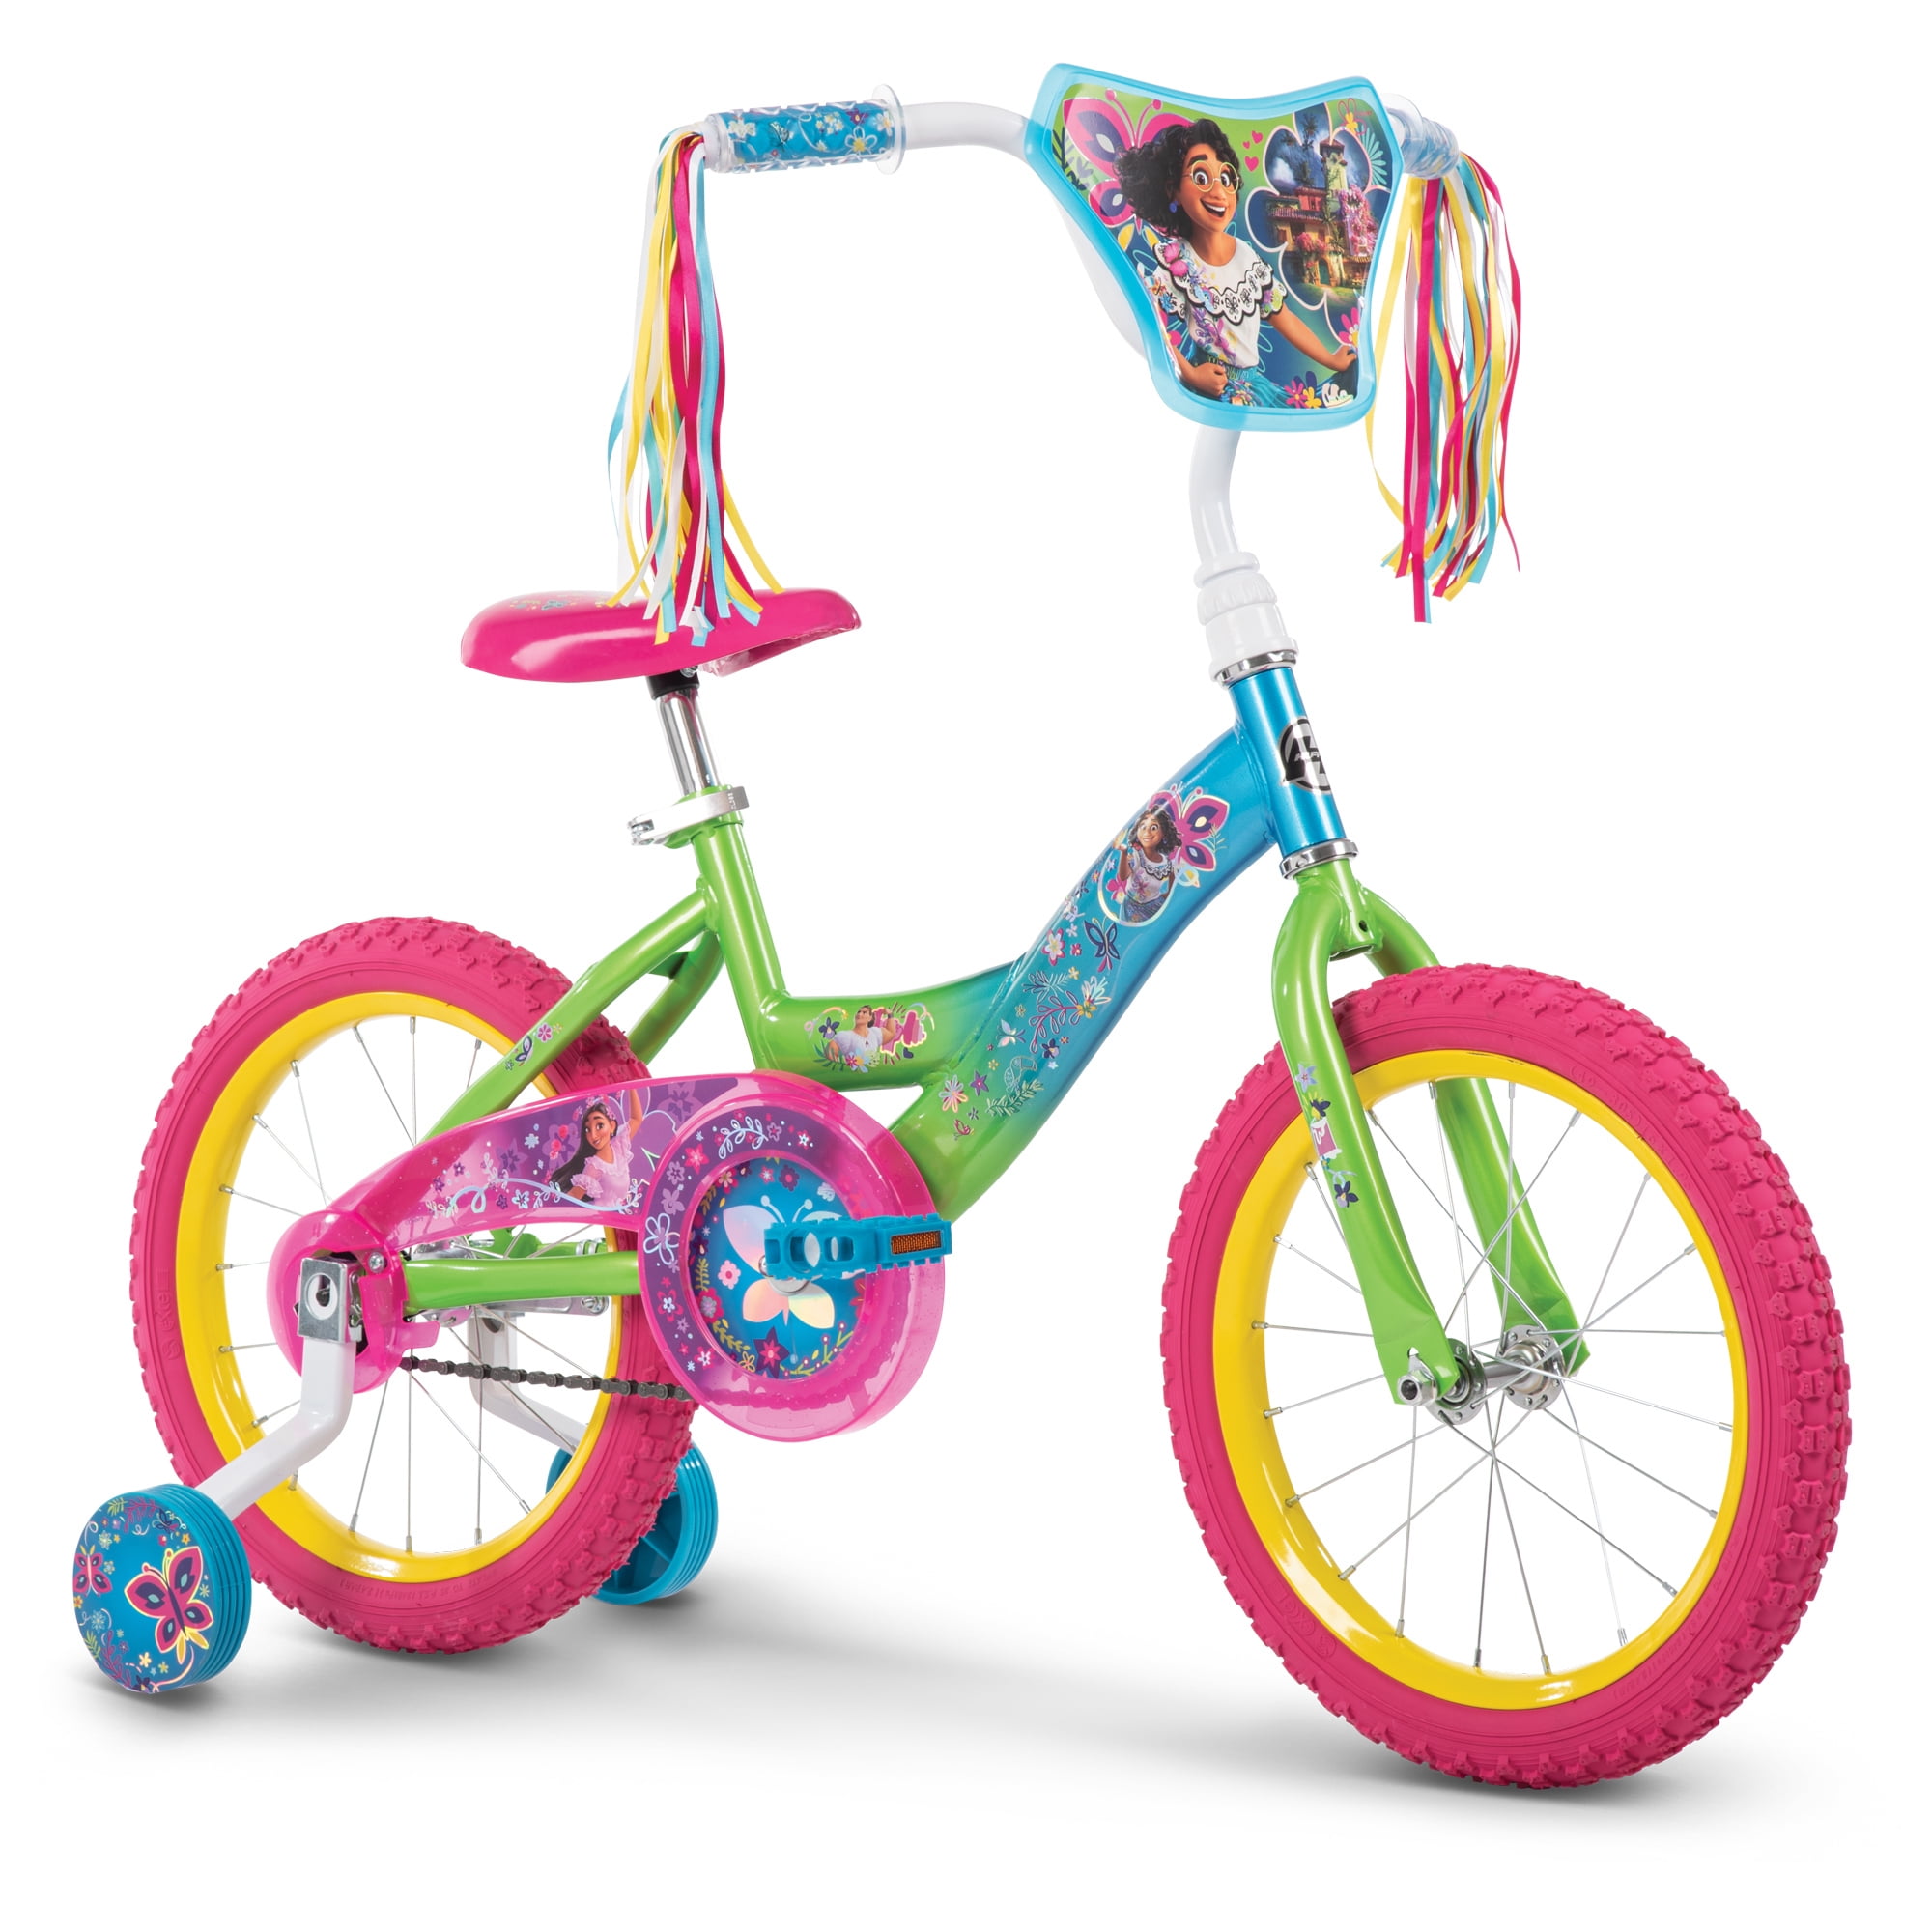 Disney Encanto 16-inch Bike for Girls, Blue/Green/Pink, by Huffy